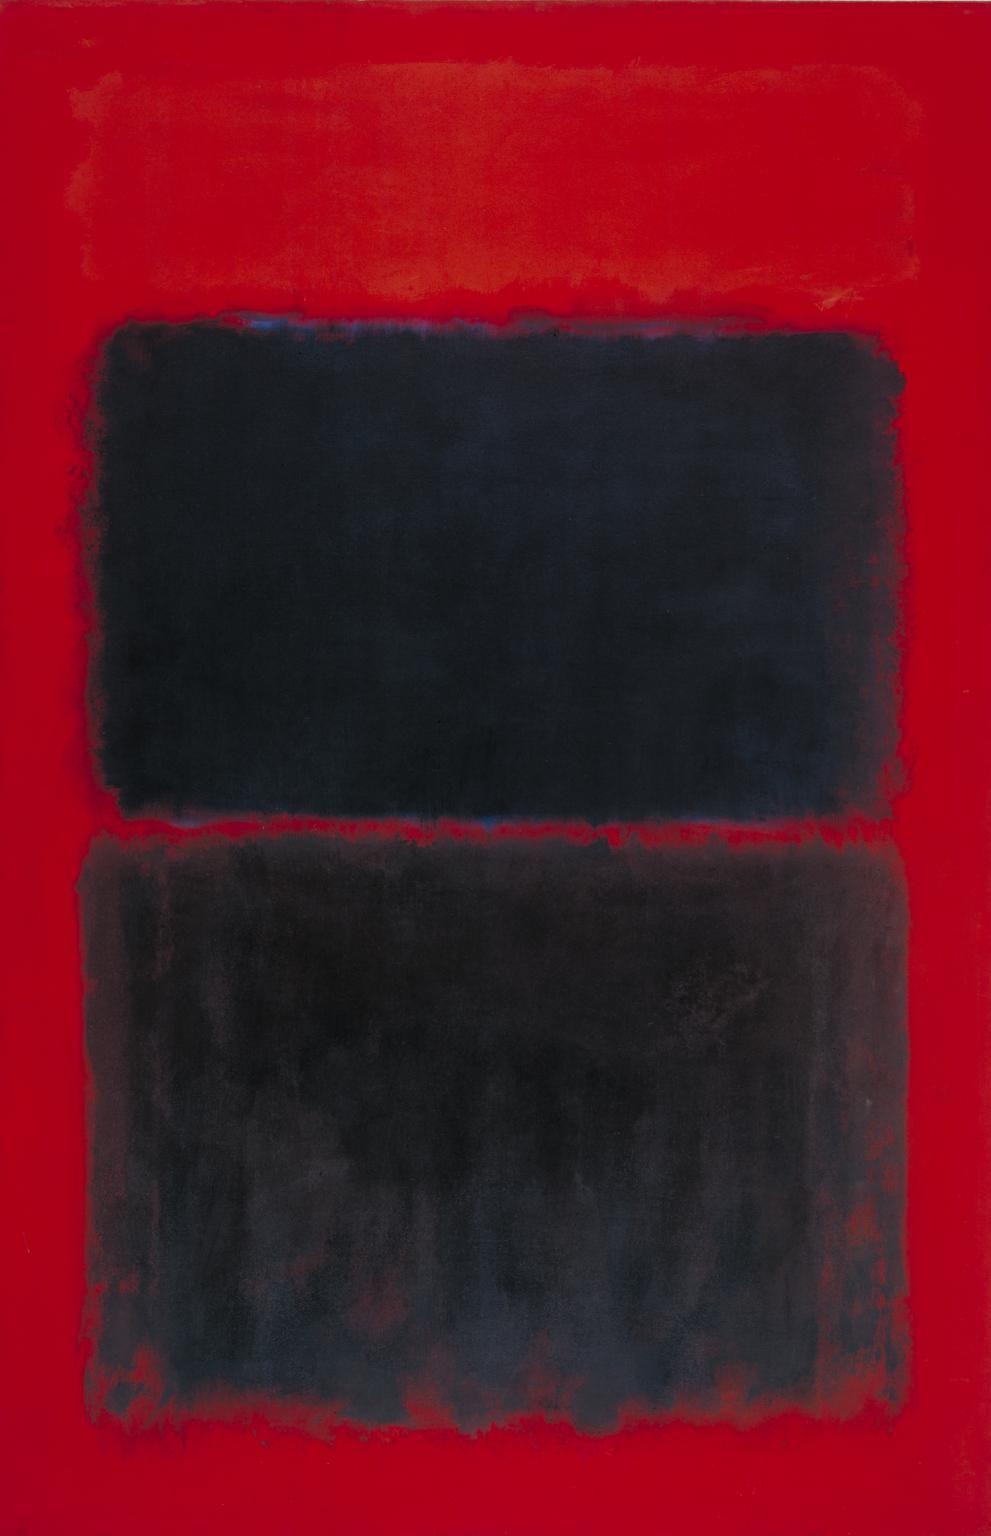 Black and Red Rectangles Logo - Light Red Over Black', Mark Rothko, 1957 | Tate